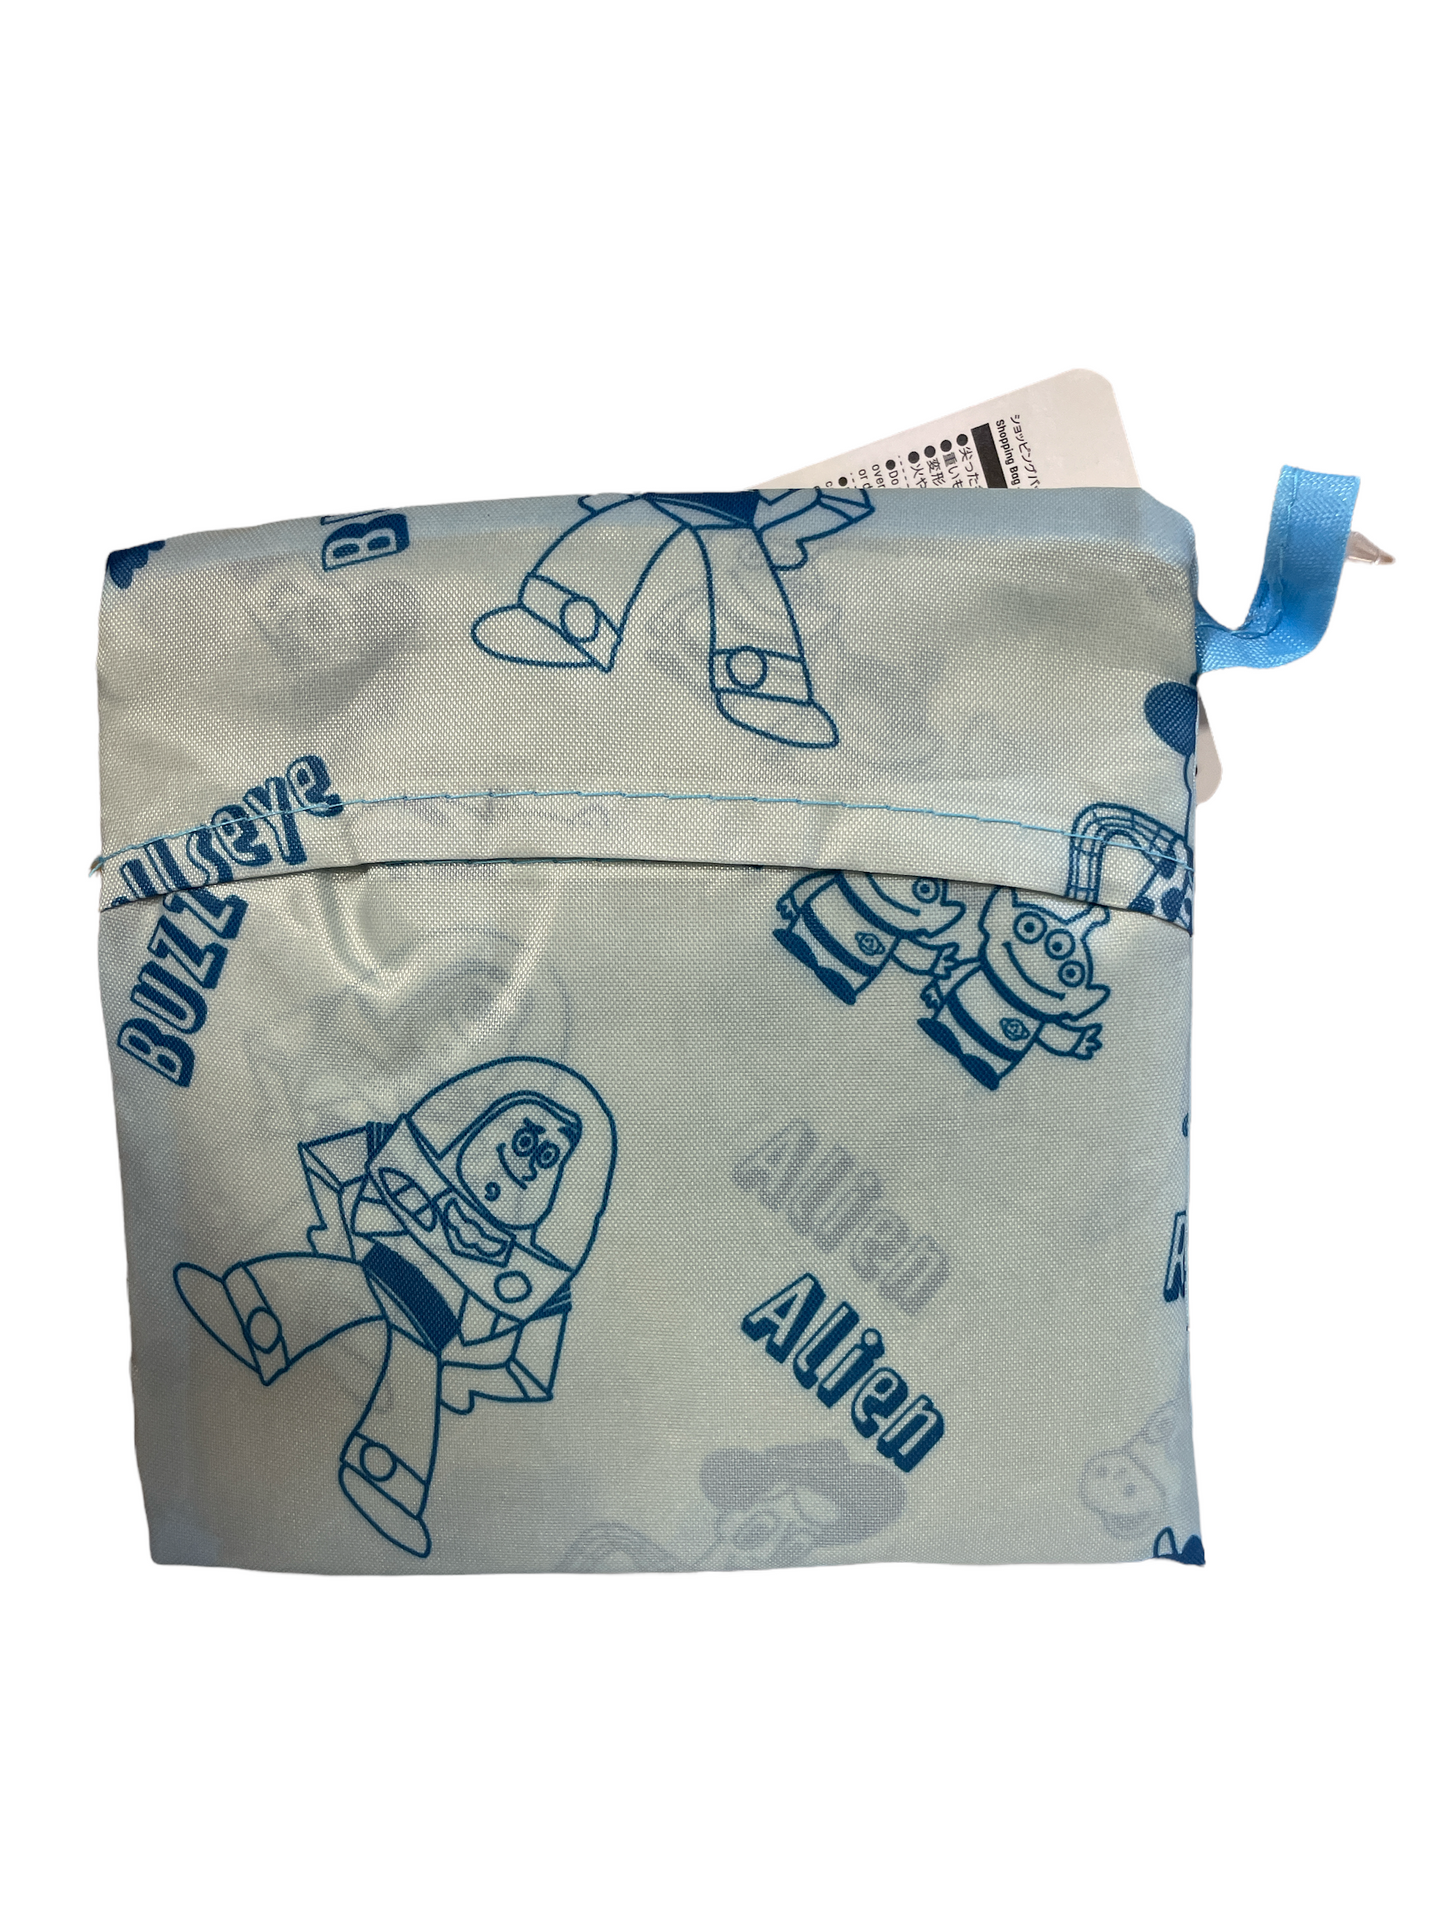 Japan Toy Story Shopping bag 購物袋